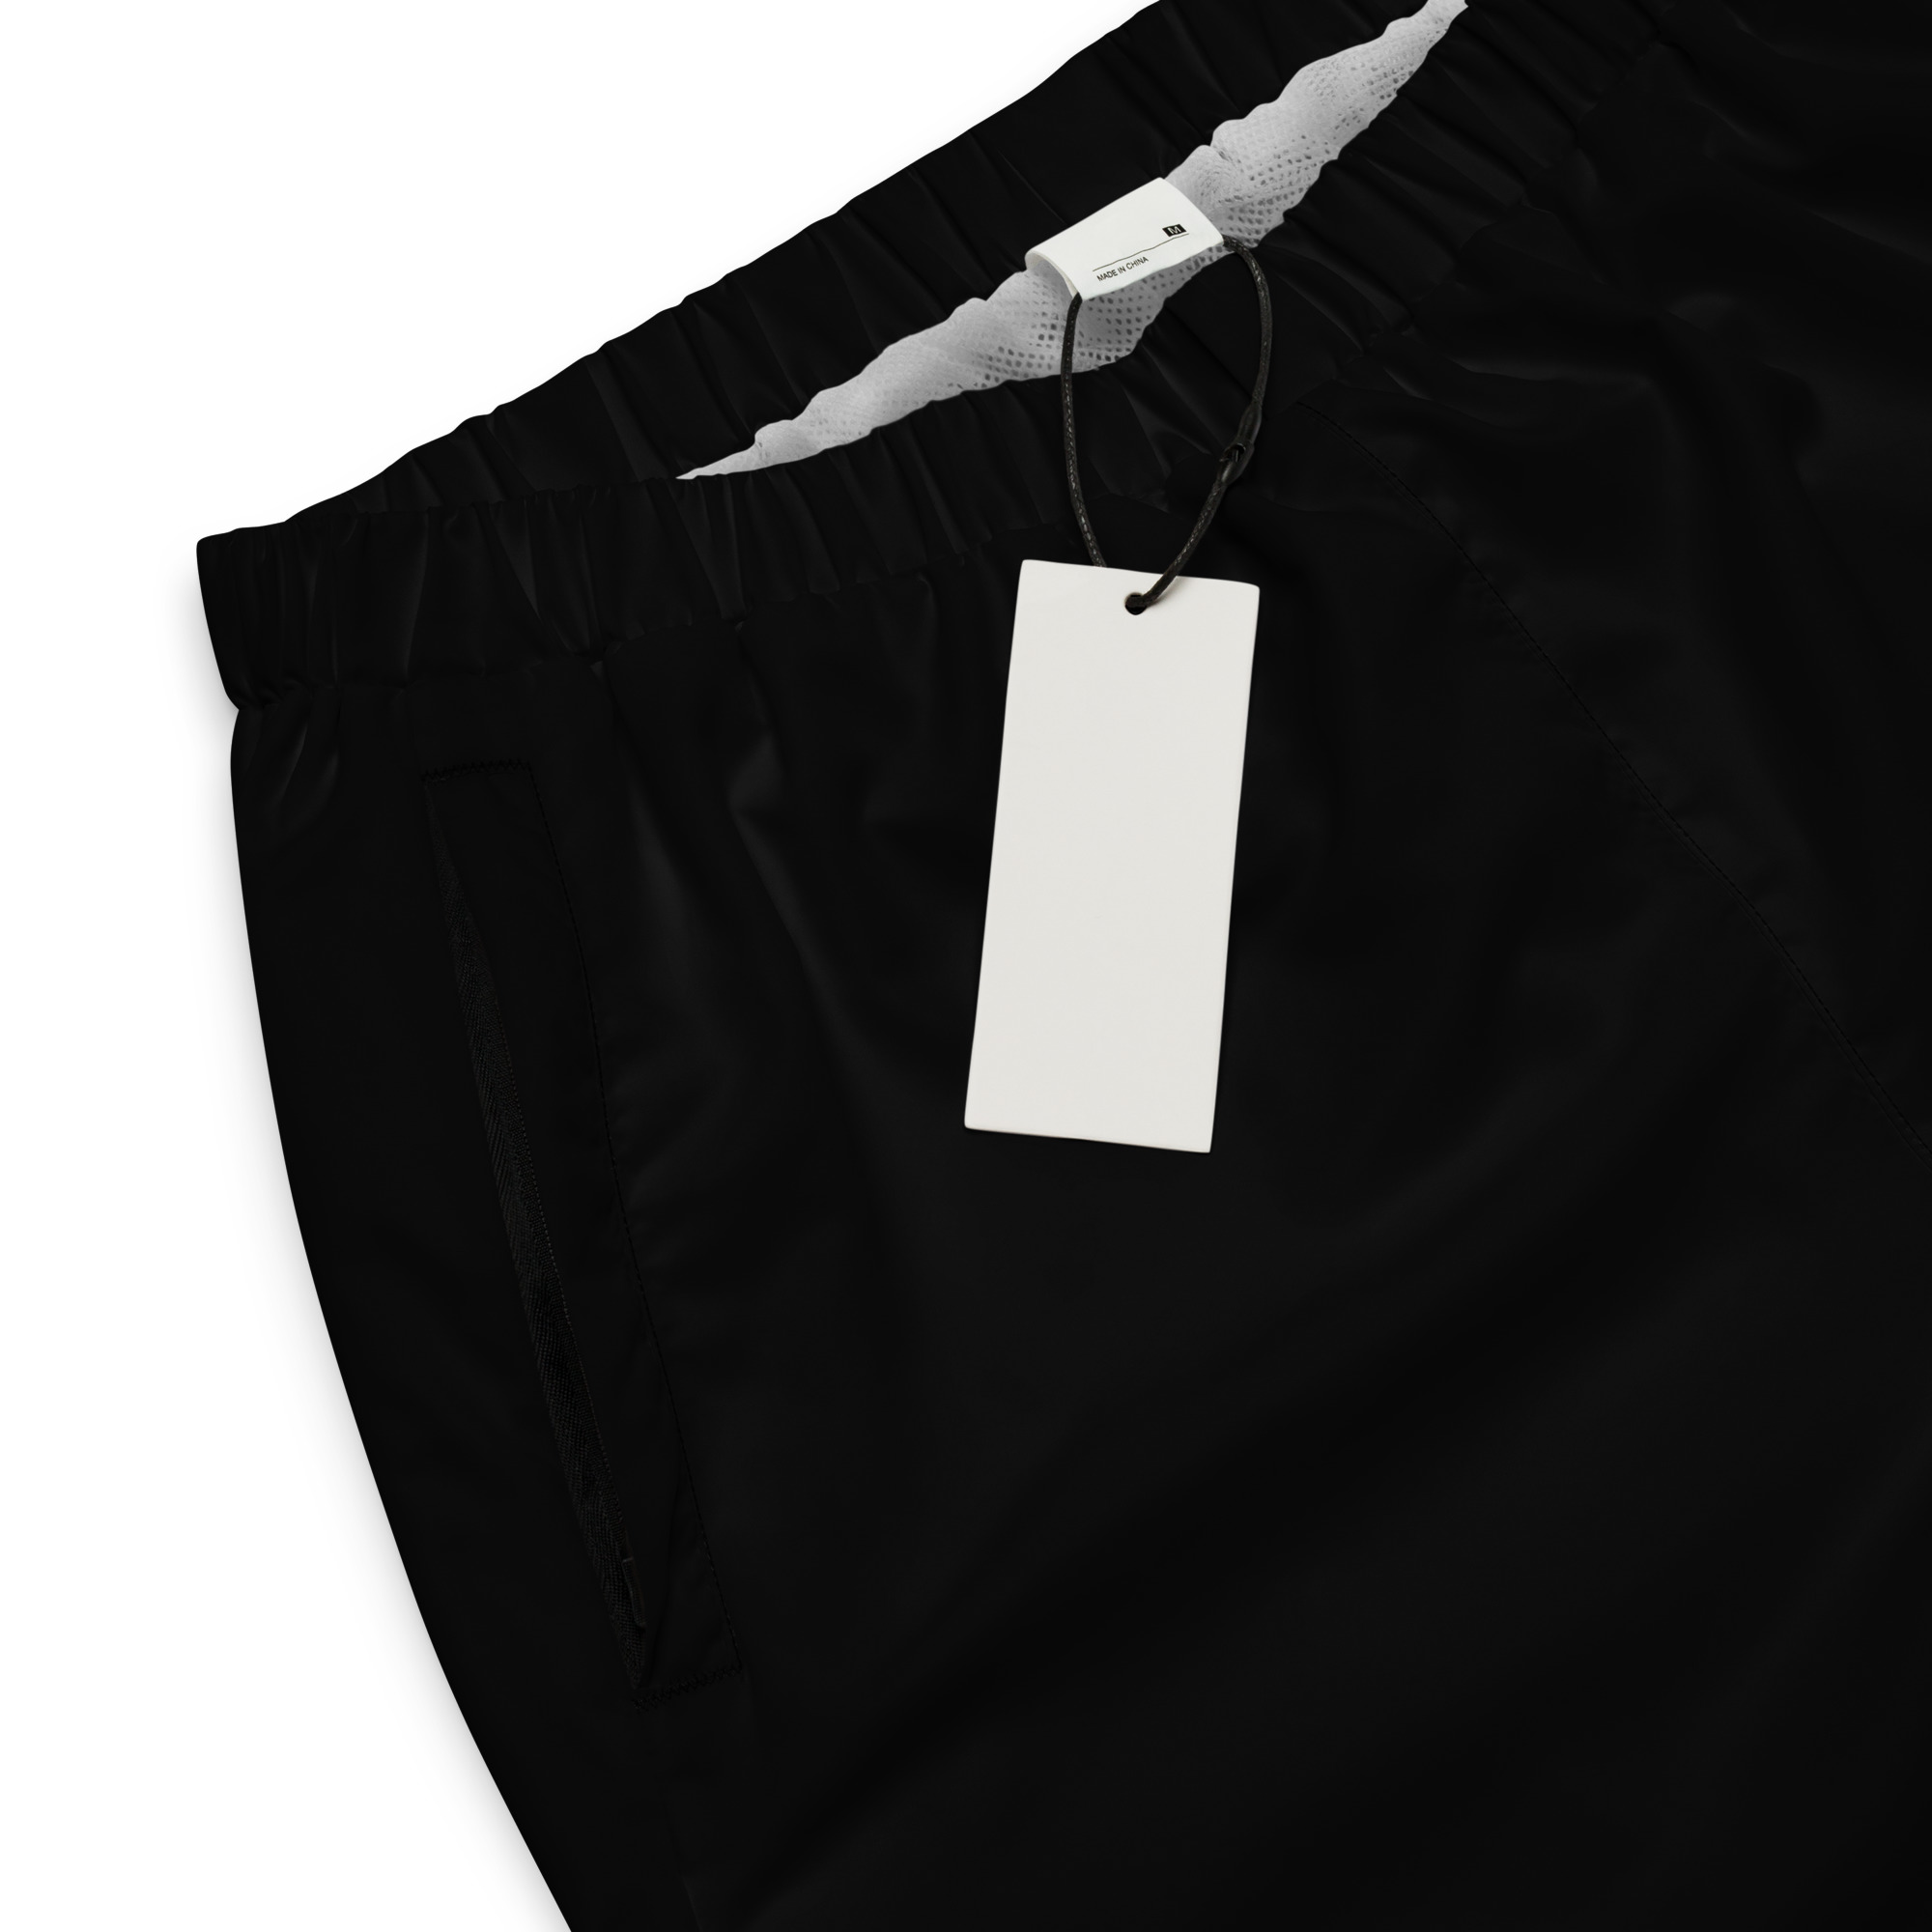 all-over-print-unisex-track-pants-black-product-details-6410fa7fd95ec.jpg